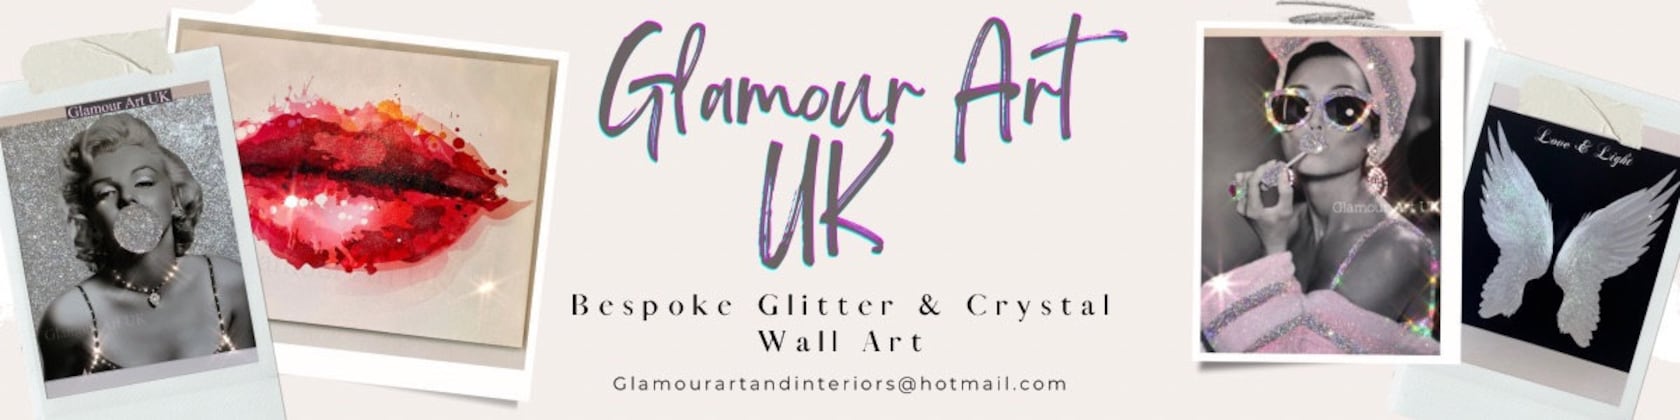 Glamorous glitter wall canvas, white and silver art, art for bathroom, art  for salon,audrey hepburn style wall canvas, glitzy art, bling art